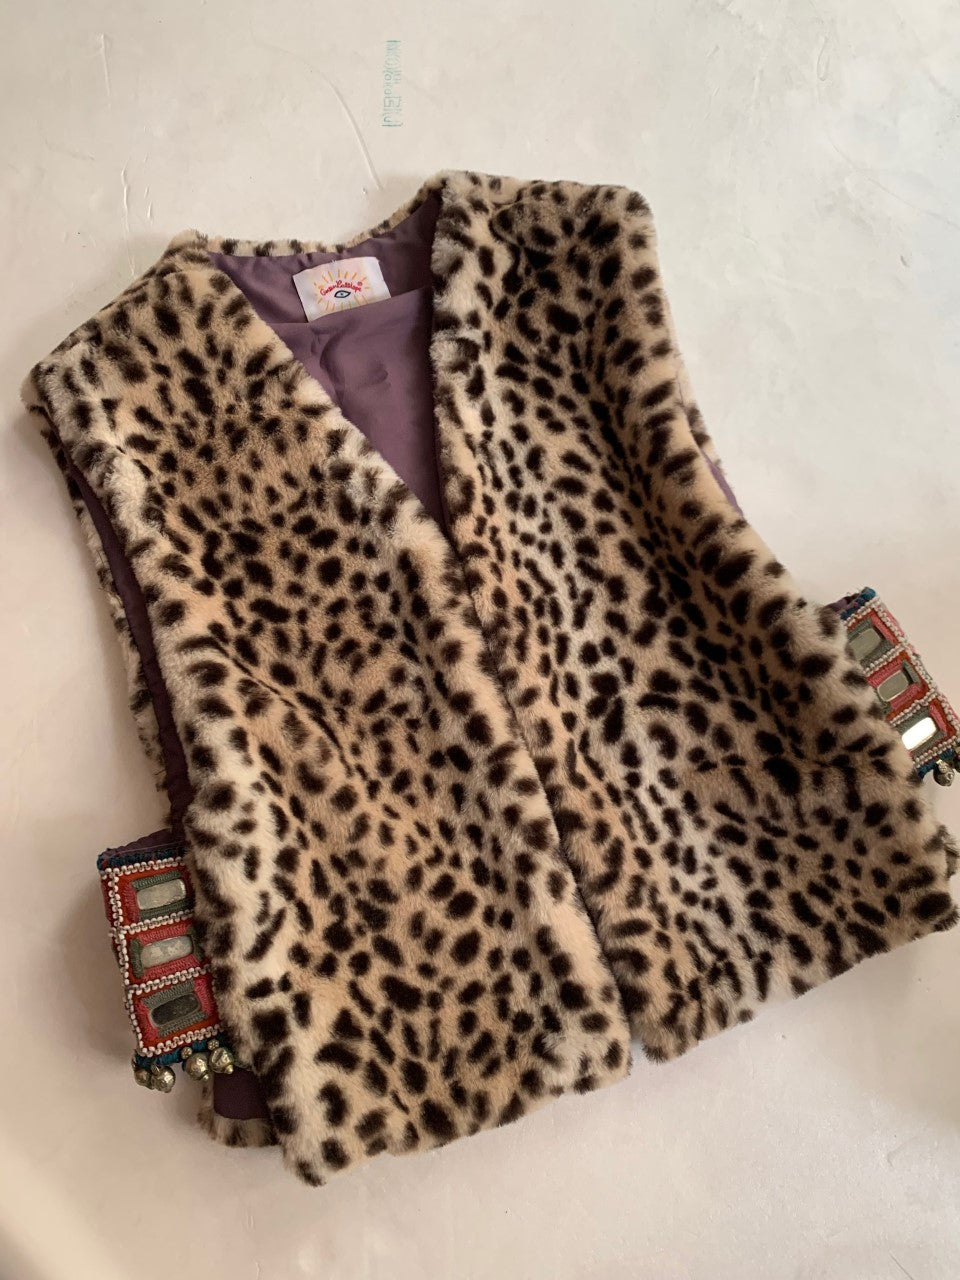 Lola leopard vest